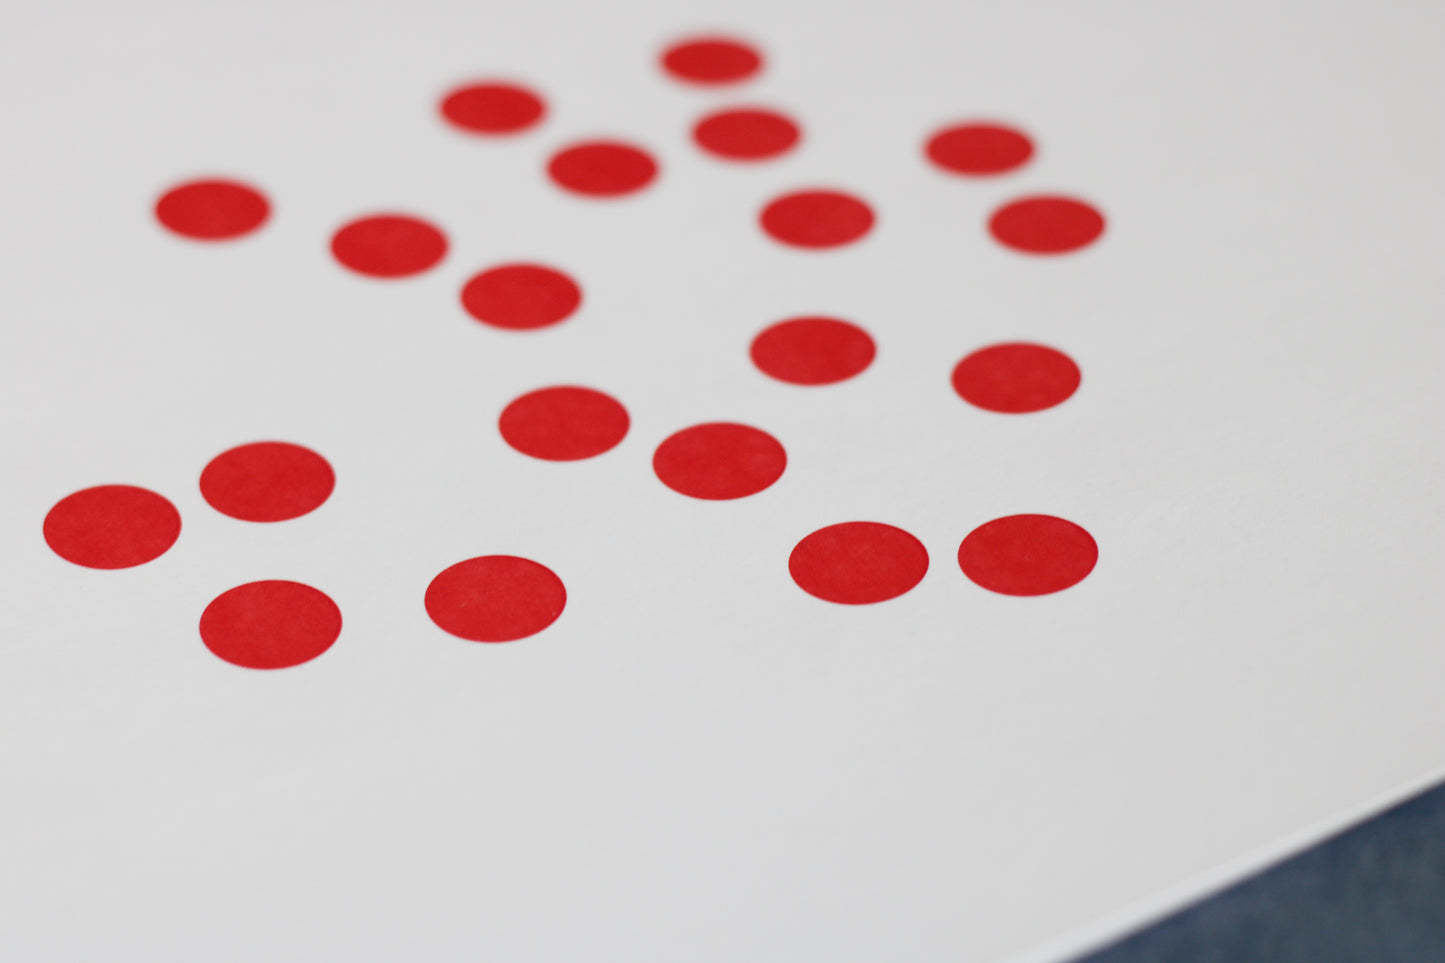 Red Dots Math flashcards  - Glenn Doman Tacucokids